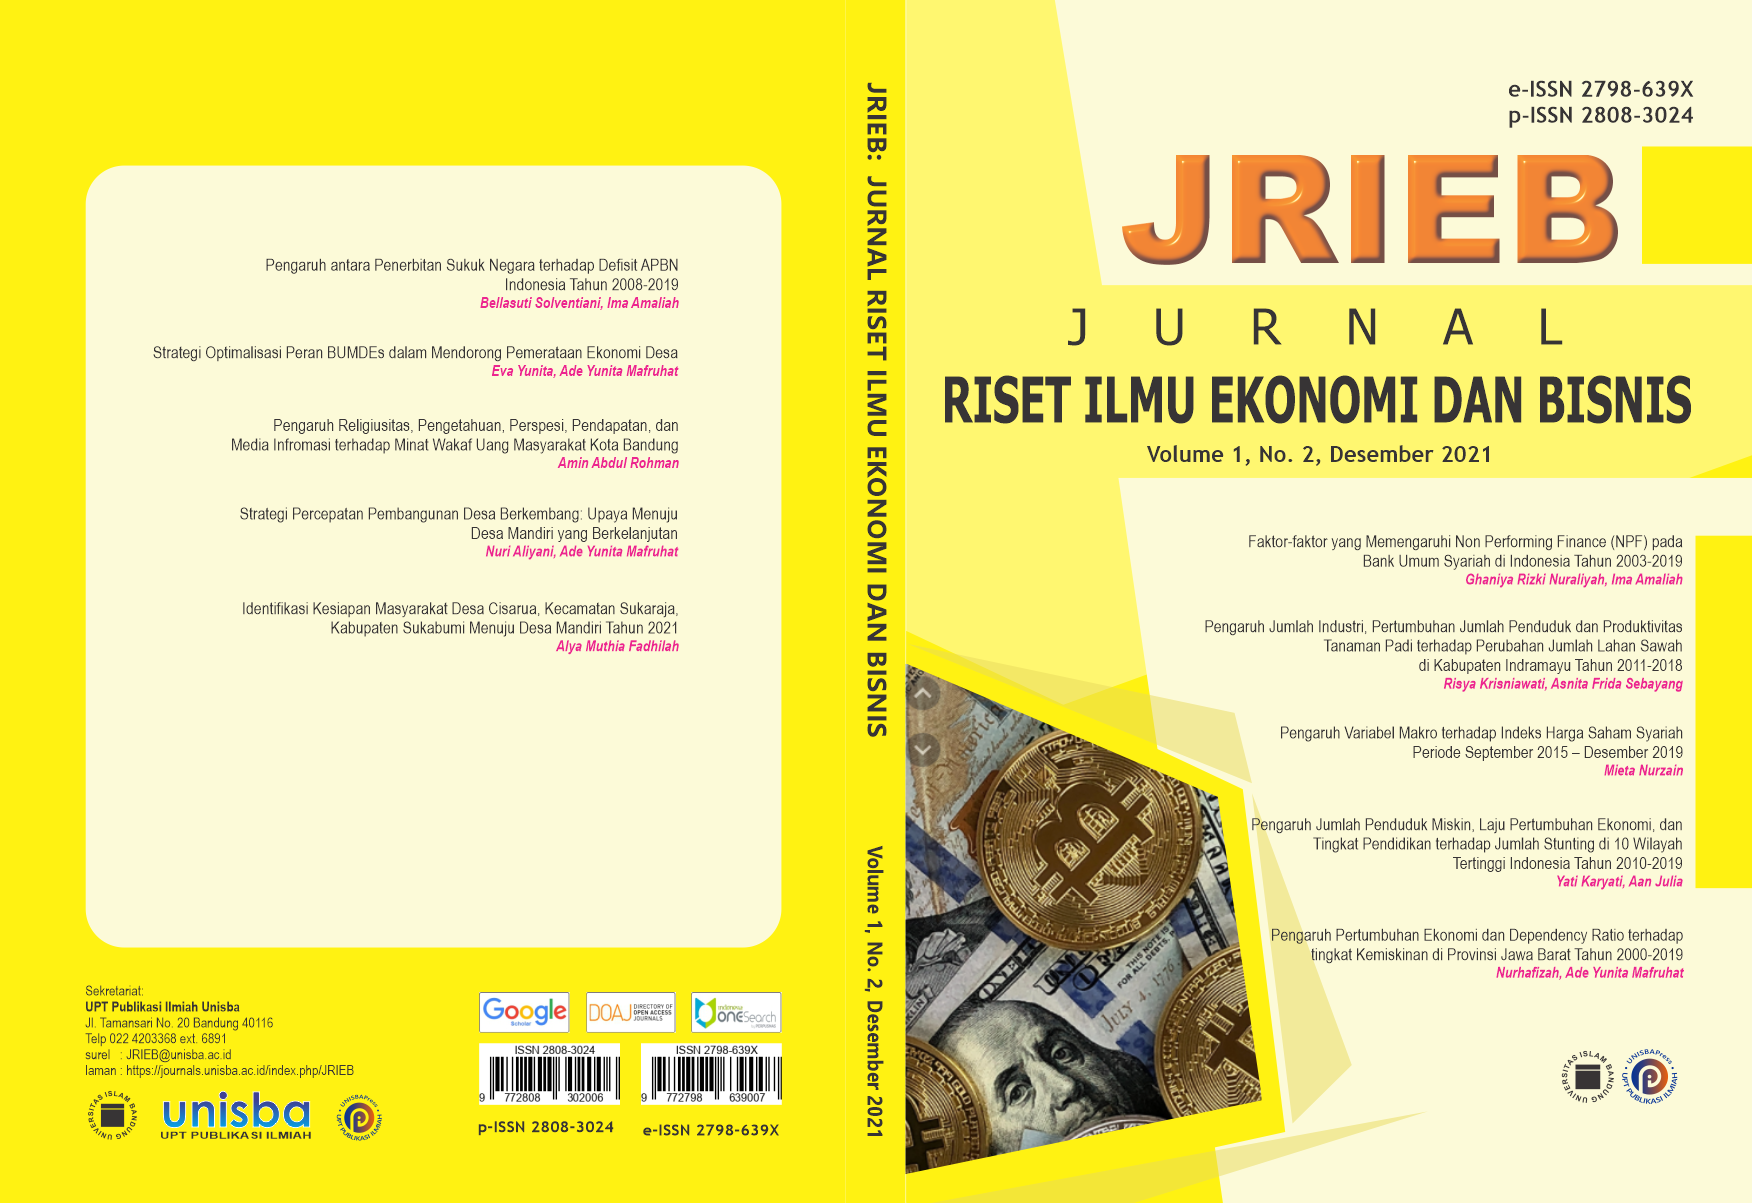 					View Volume 1, No. 2, Desember 2021, Jurnal Riset Ilmu Ekonomi dan Bisnis (JRIEB)
				